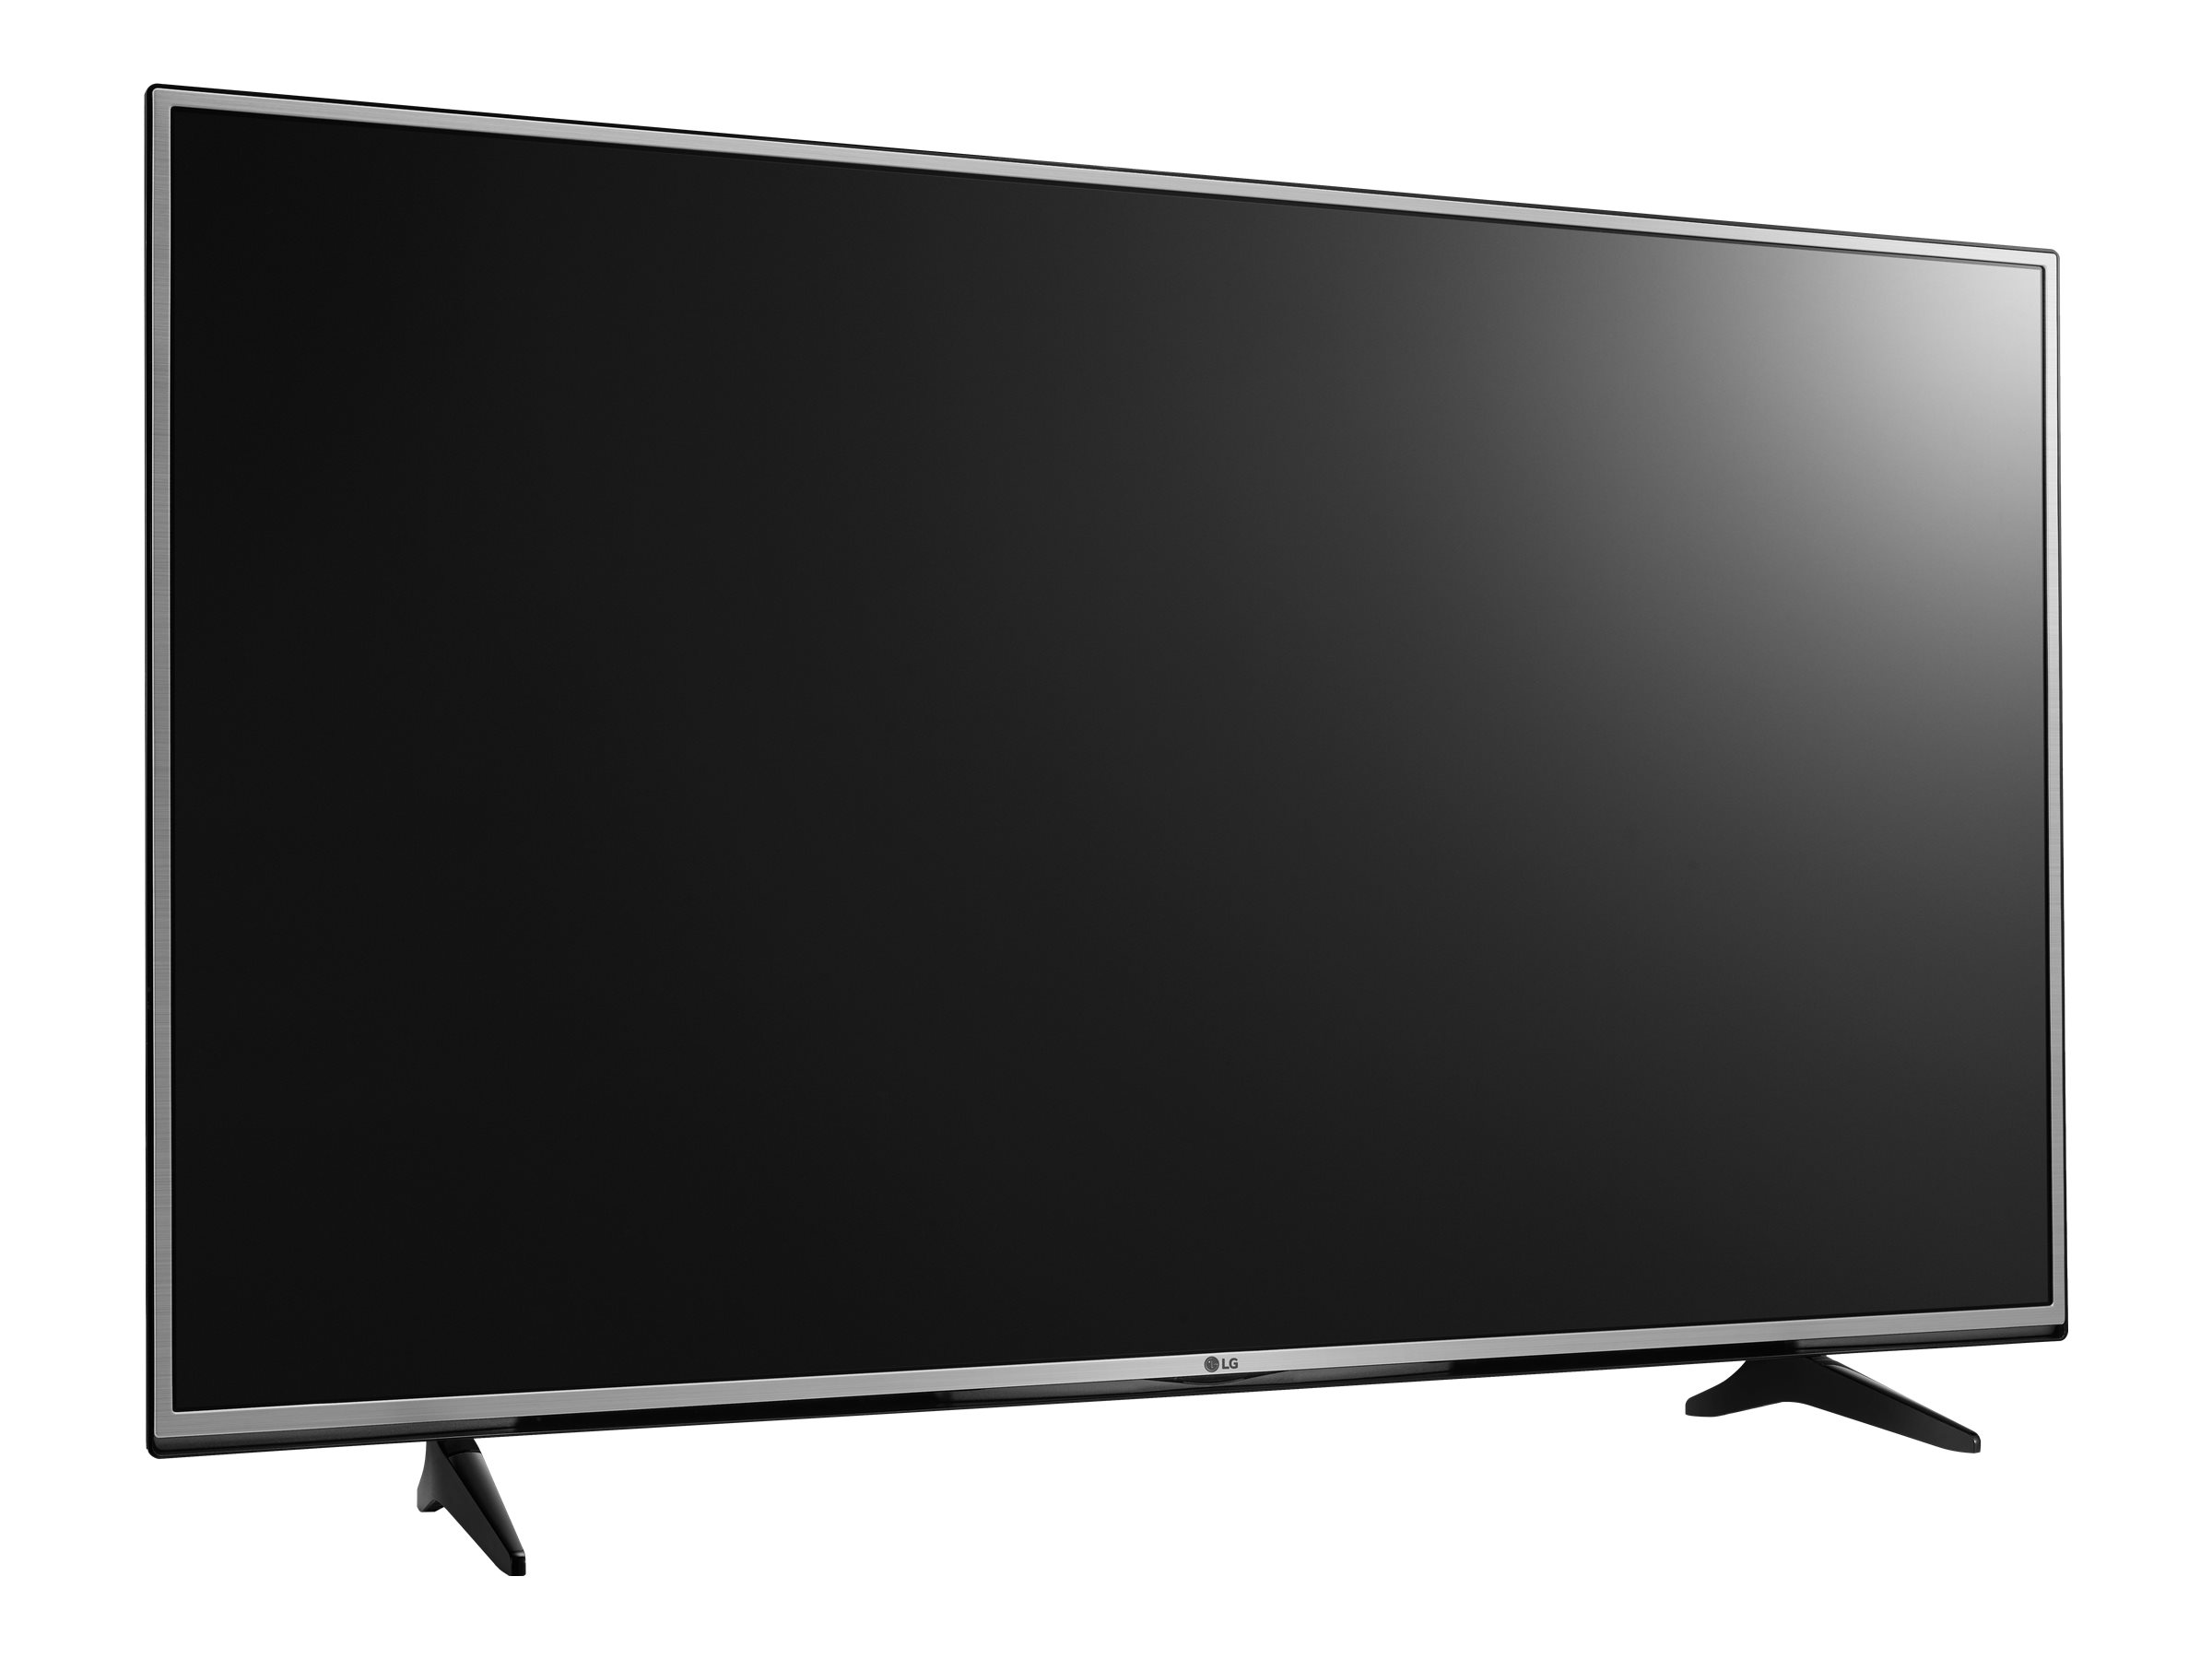 LG 55UH6030 - 55" Diagonal Class (54.6" viewable) LED-backlit LCD TV - Smart TV - webOS - 4K UHD (2160p) 3840 x 2160 - HDR - image 2 of 13